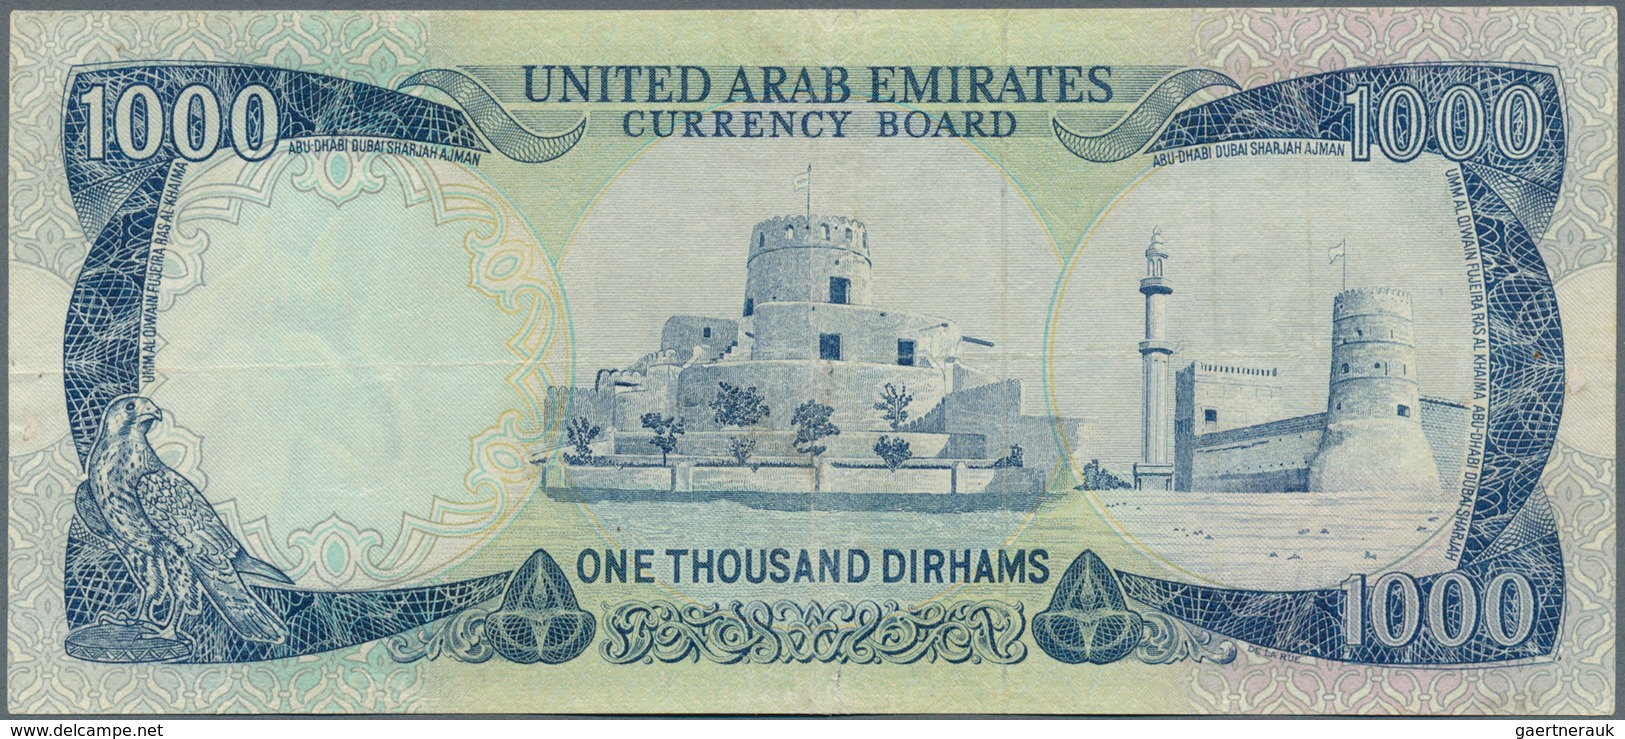 02574 United Arab Emirates / Vereinigte Arabische Emirate: Rare Note 1000 Dirhams ND(1976) P. 6, Light Fol - United Arab Emirates